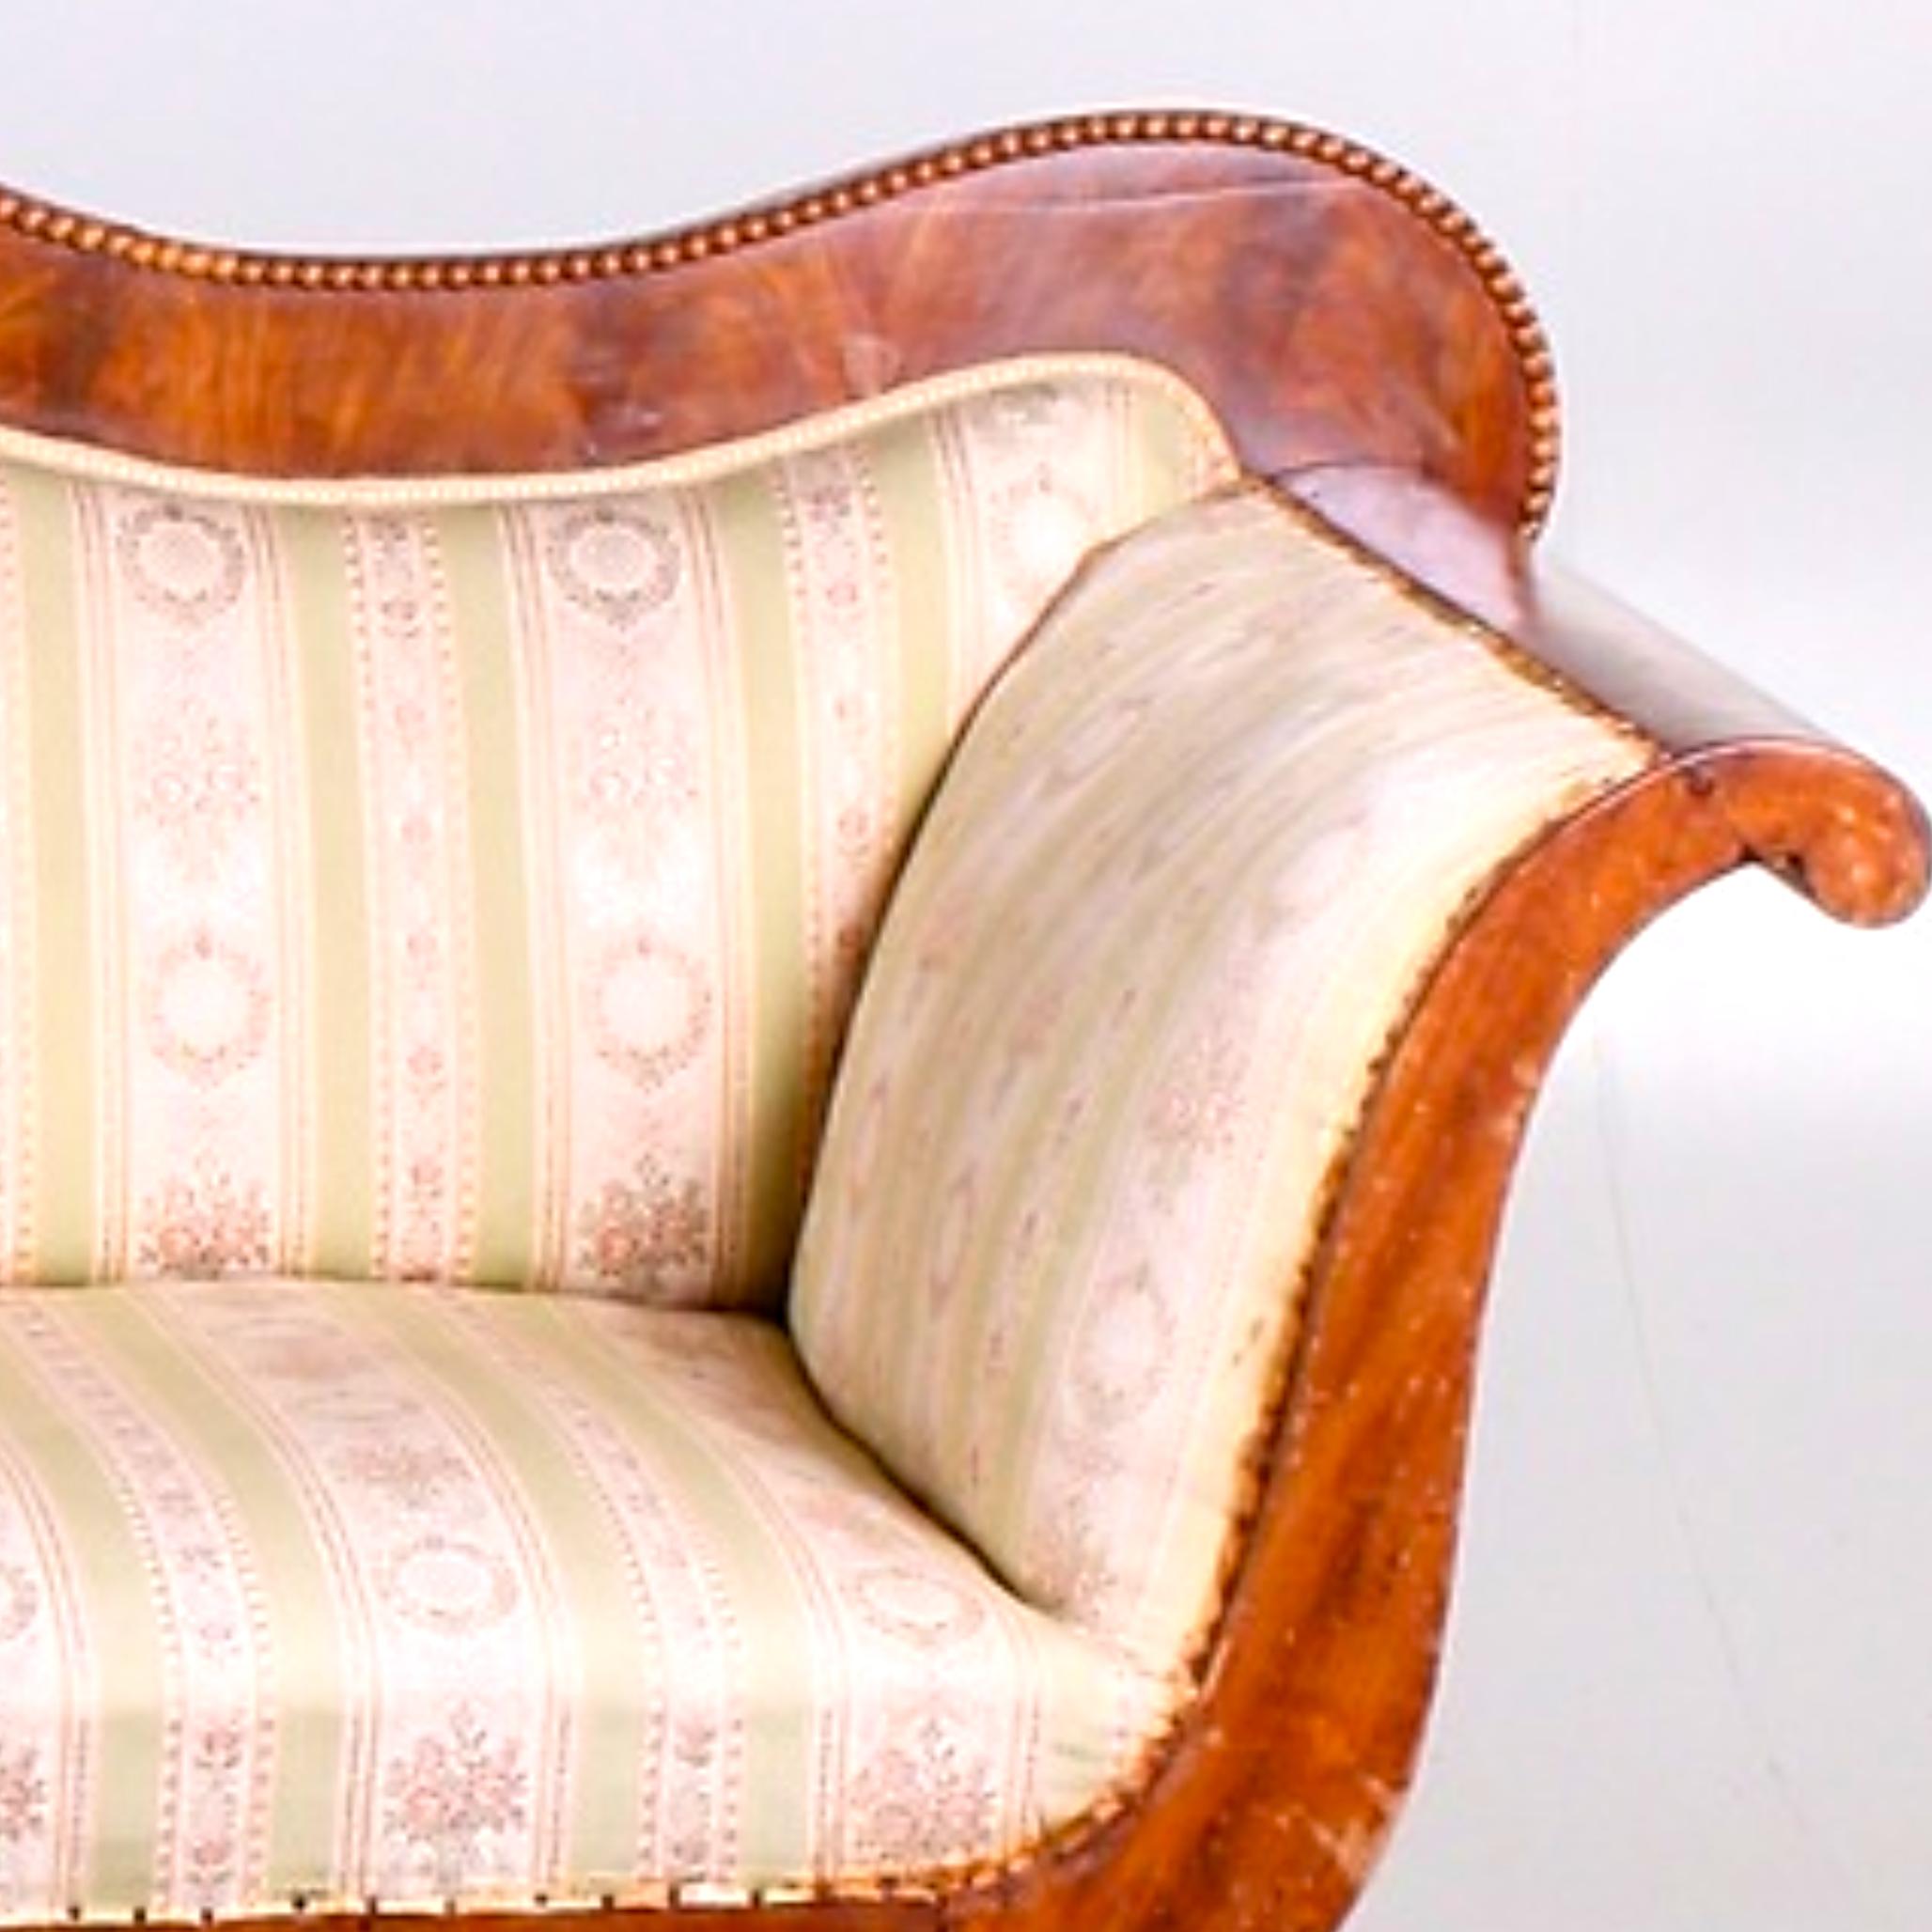 Polished Biedermeier Sofa Couch Empire Settle Swedish 19th Century 3-4 Seat Loveseat